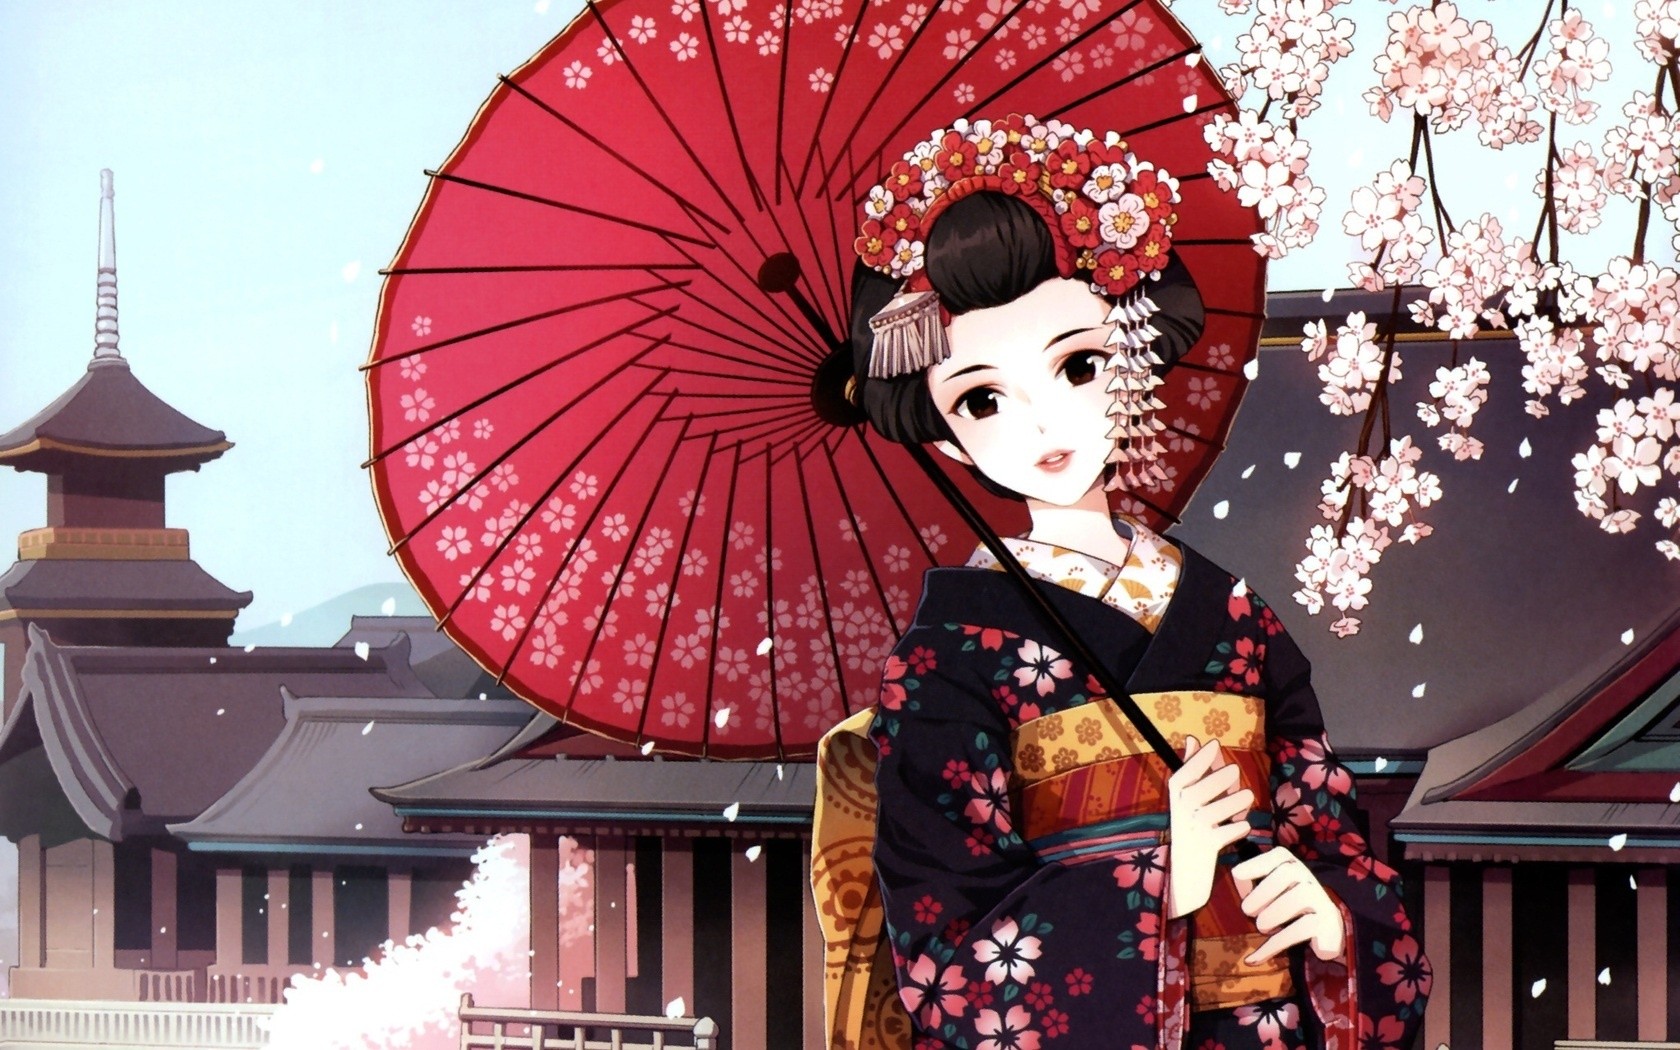 Anime 1680x1050 anime anime girls kimono traditional clothing cherry blossom umbrella original characters Japan dark hair Asia fantasy art